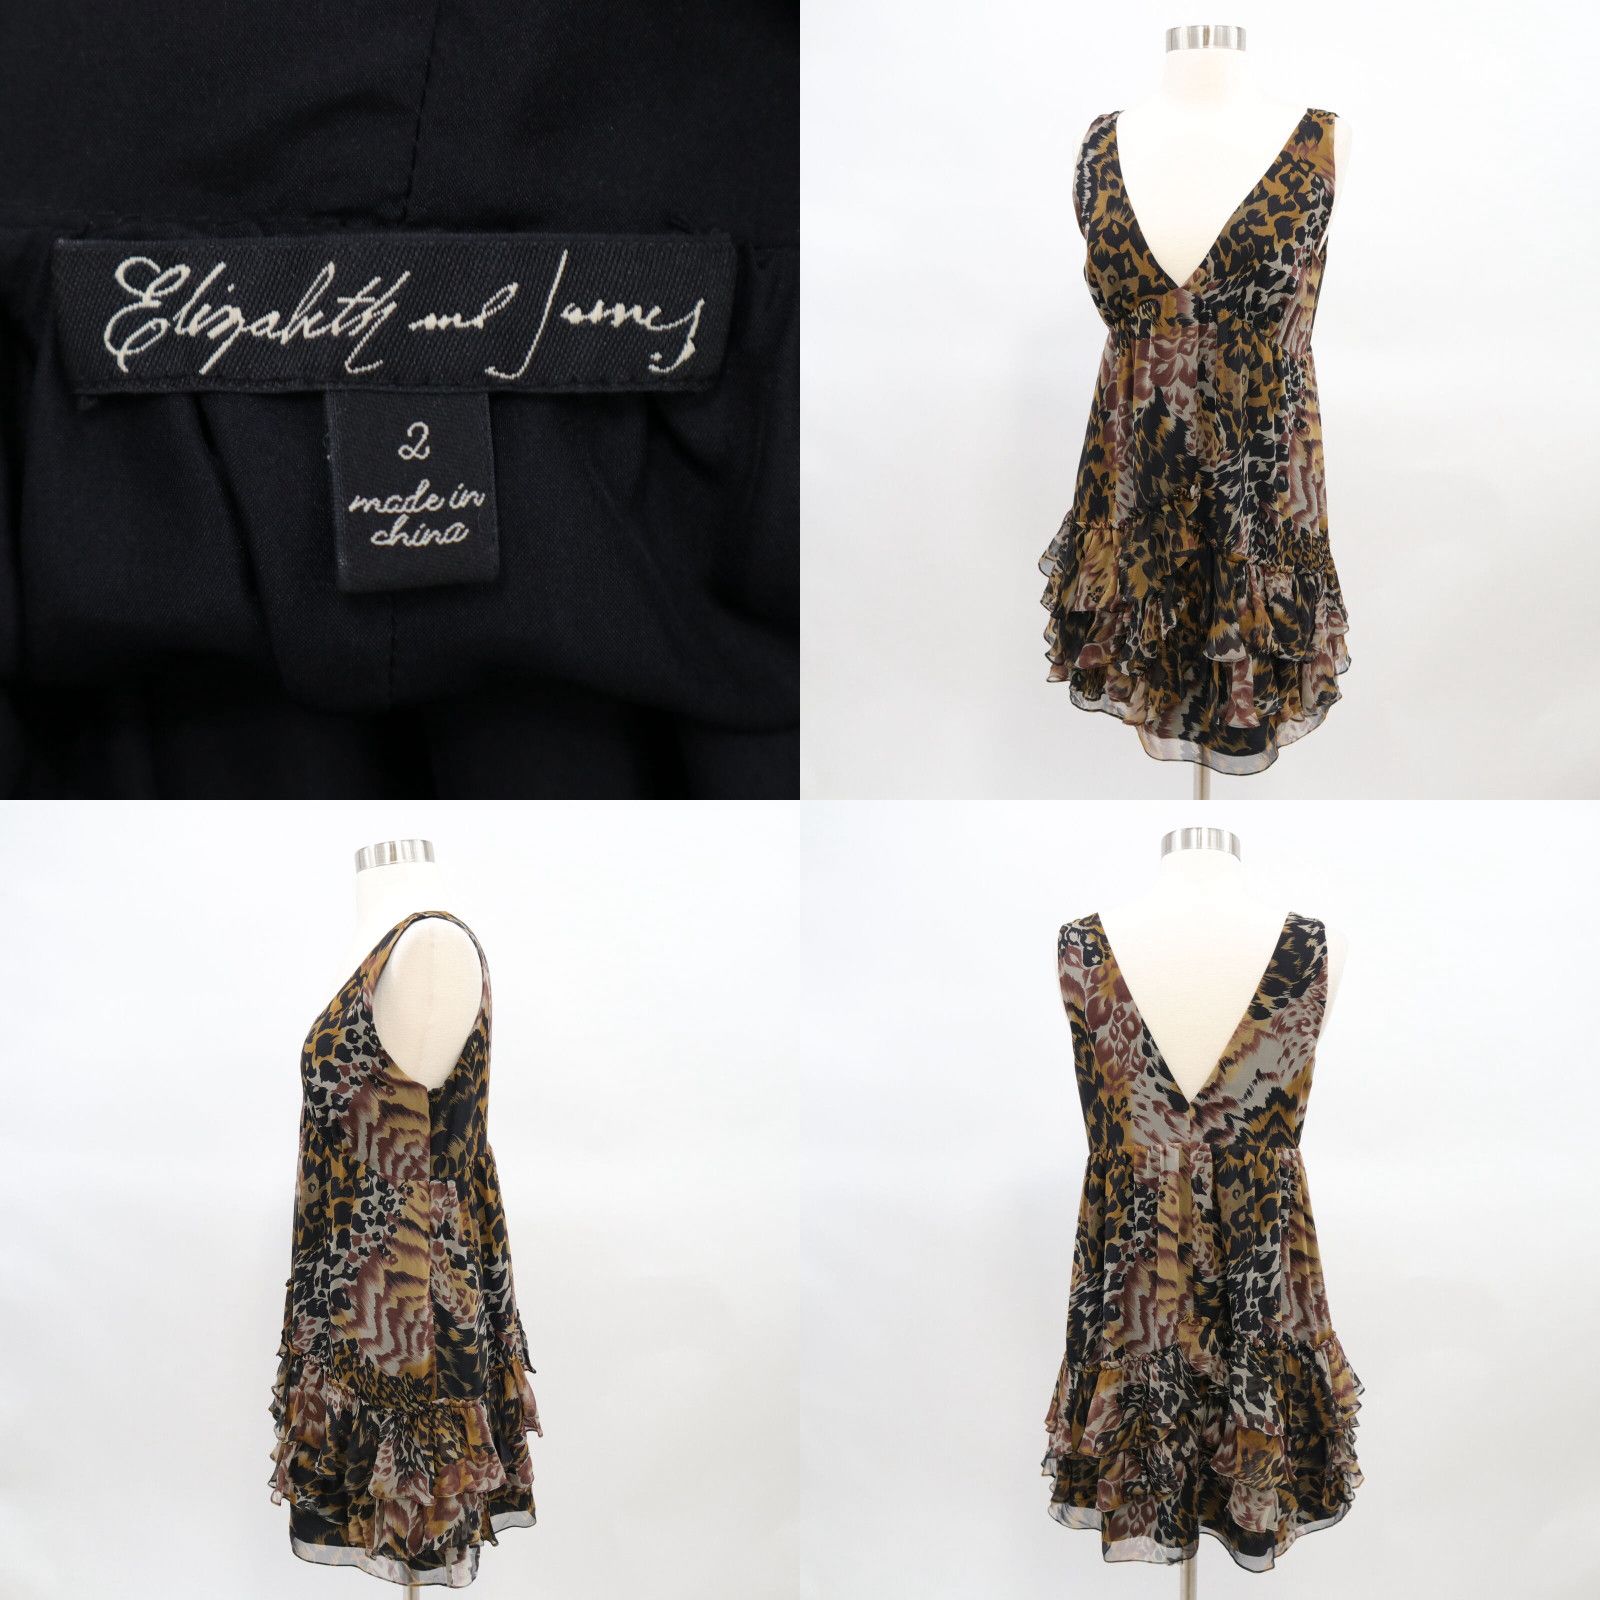 Elizabeth and James Elizabeth & James Mini Dress Silk Womens 2 Ruffles Animal Print Brown Deep V Size XS / US 0-2 / IT 36-38 - 4 Preview